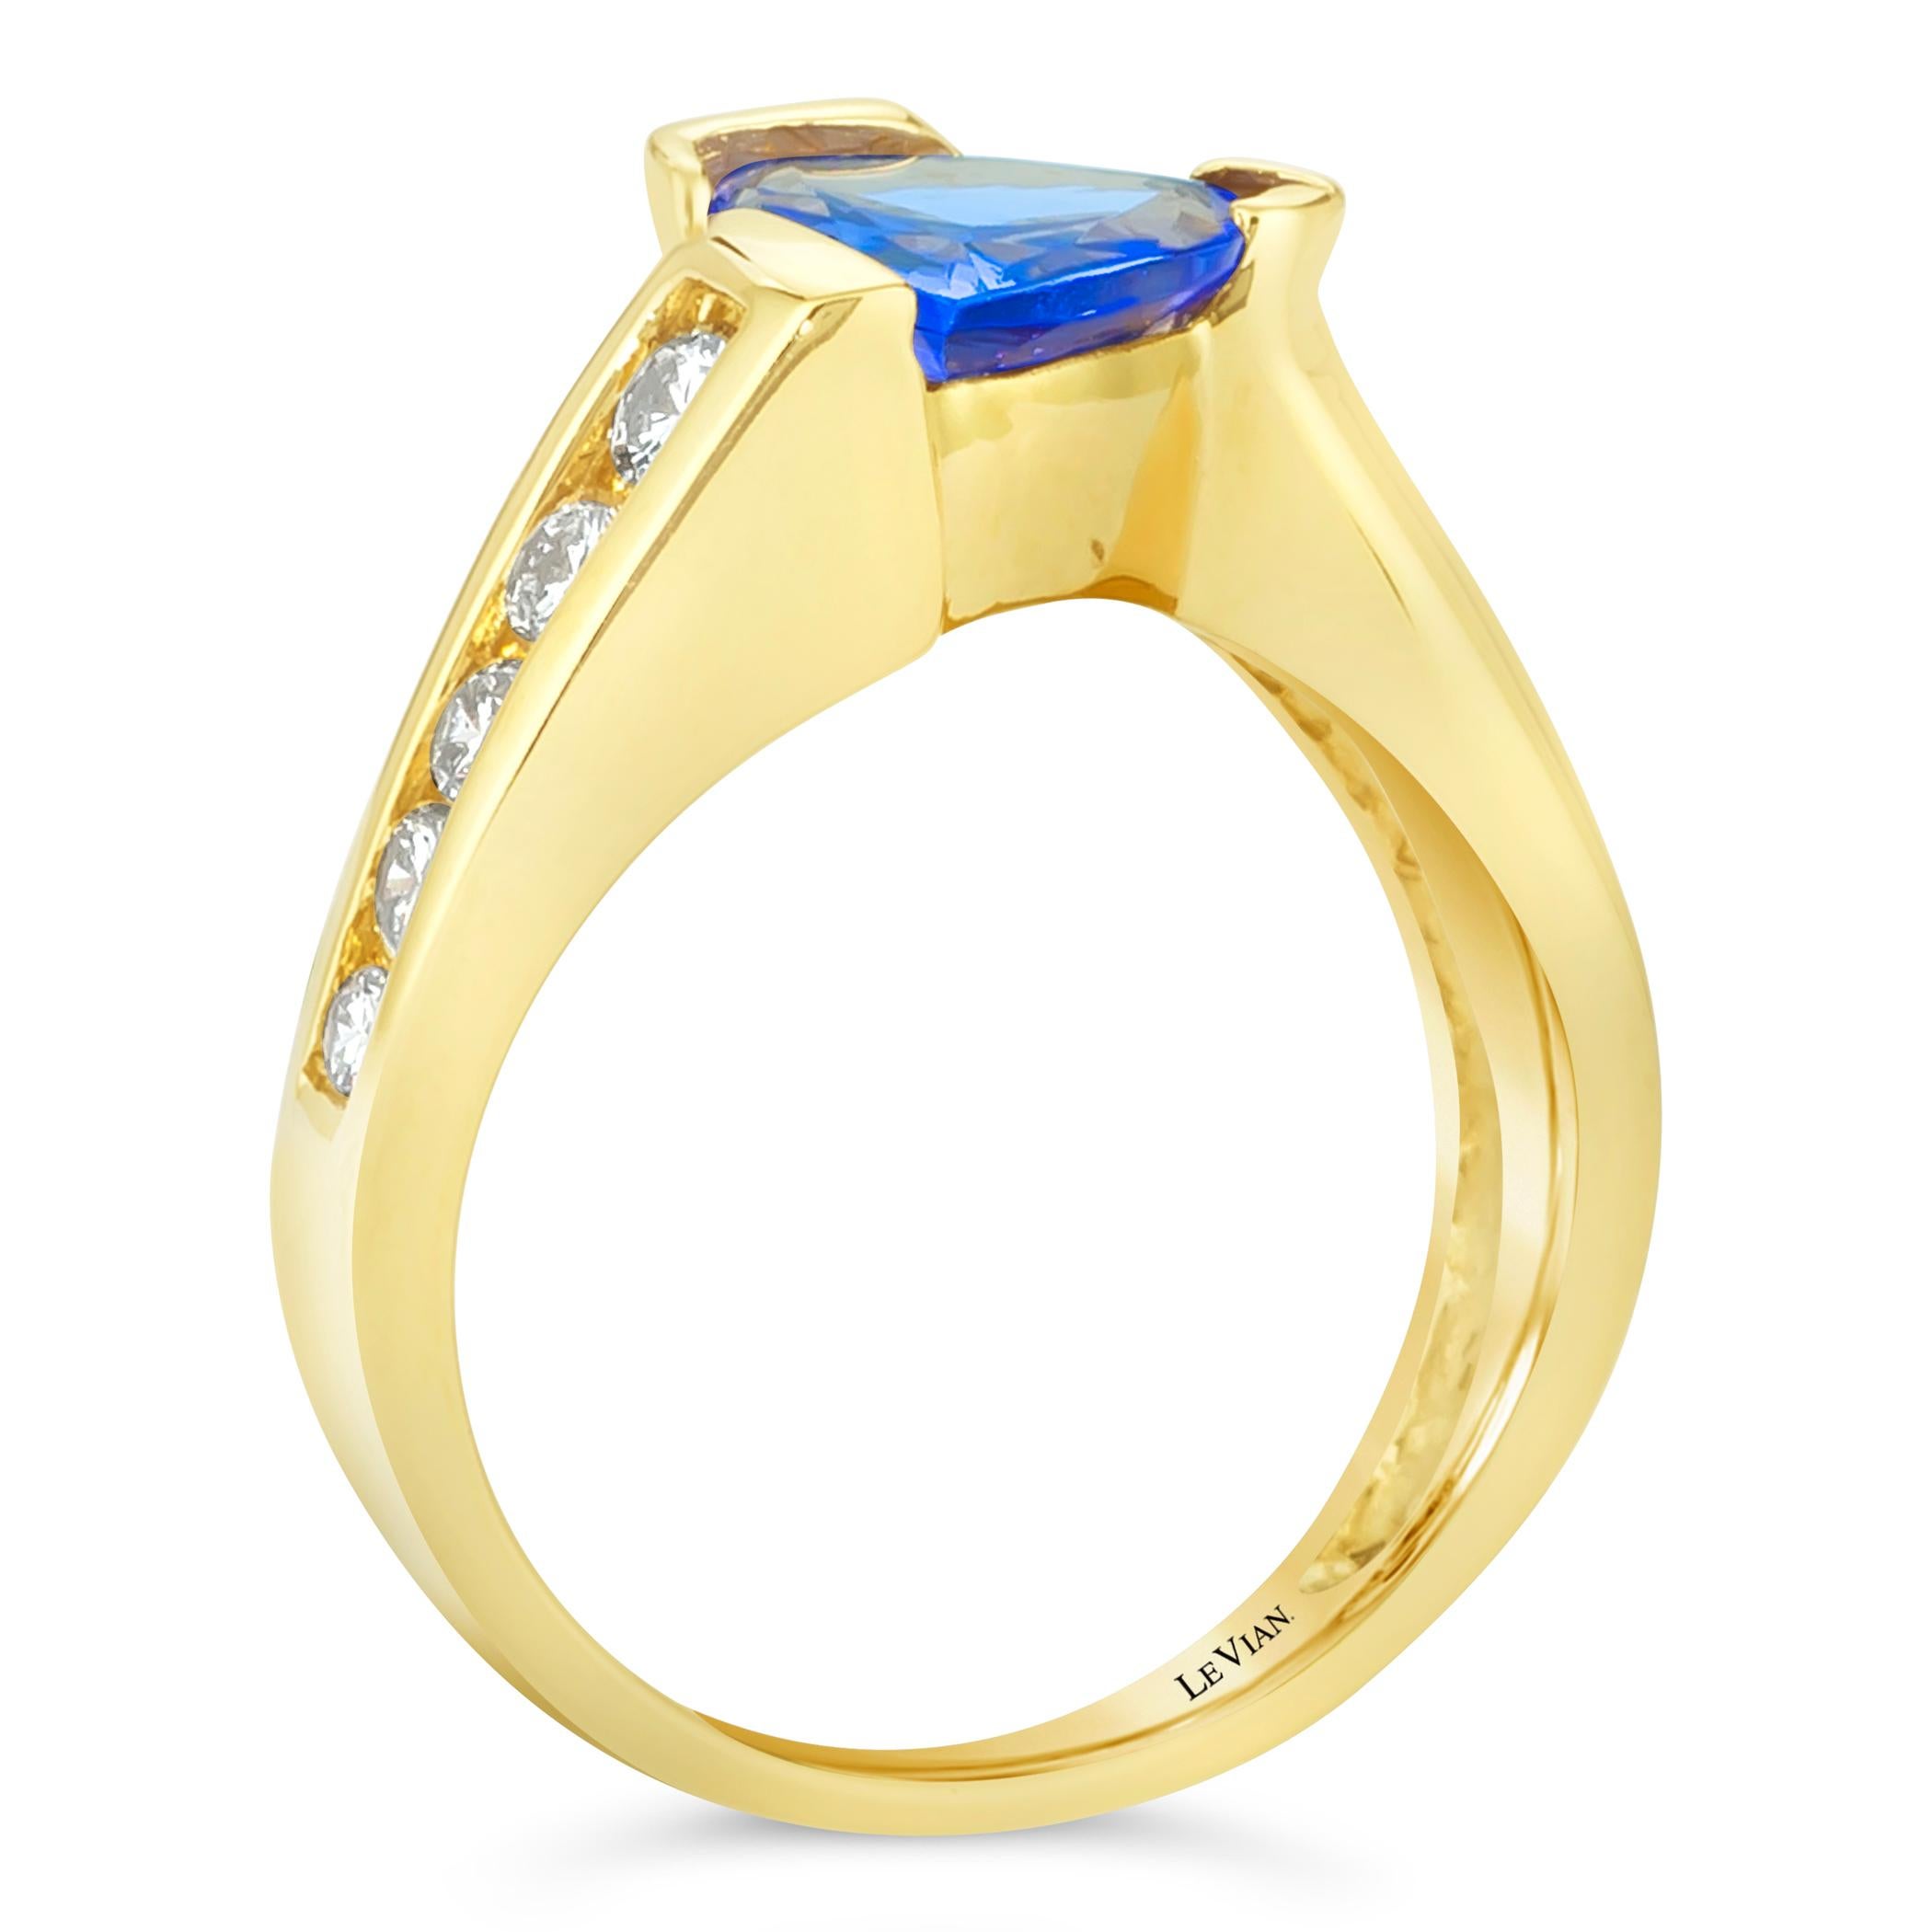 LeVian Tanzanite Ring Blue 1 1/4 cts Gemstone Cocktail Ring Size 4.75